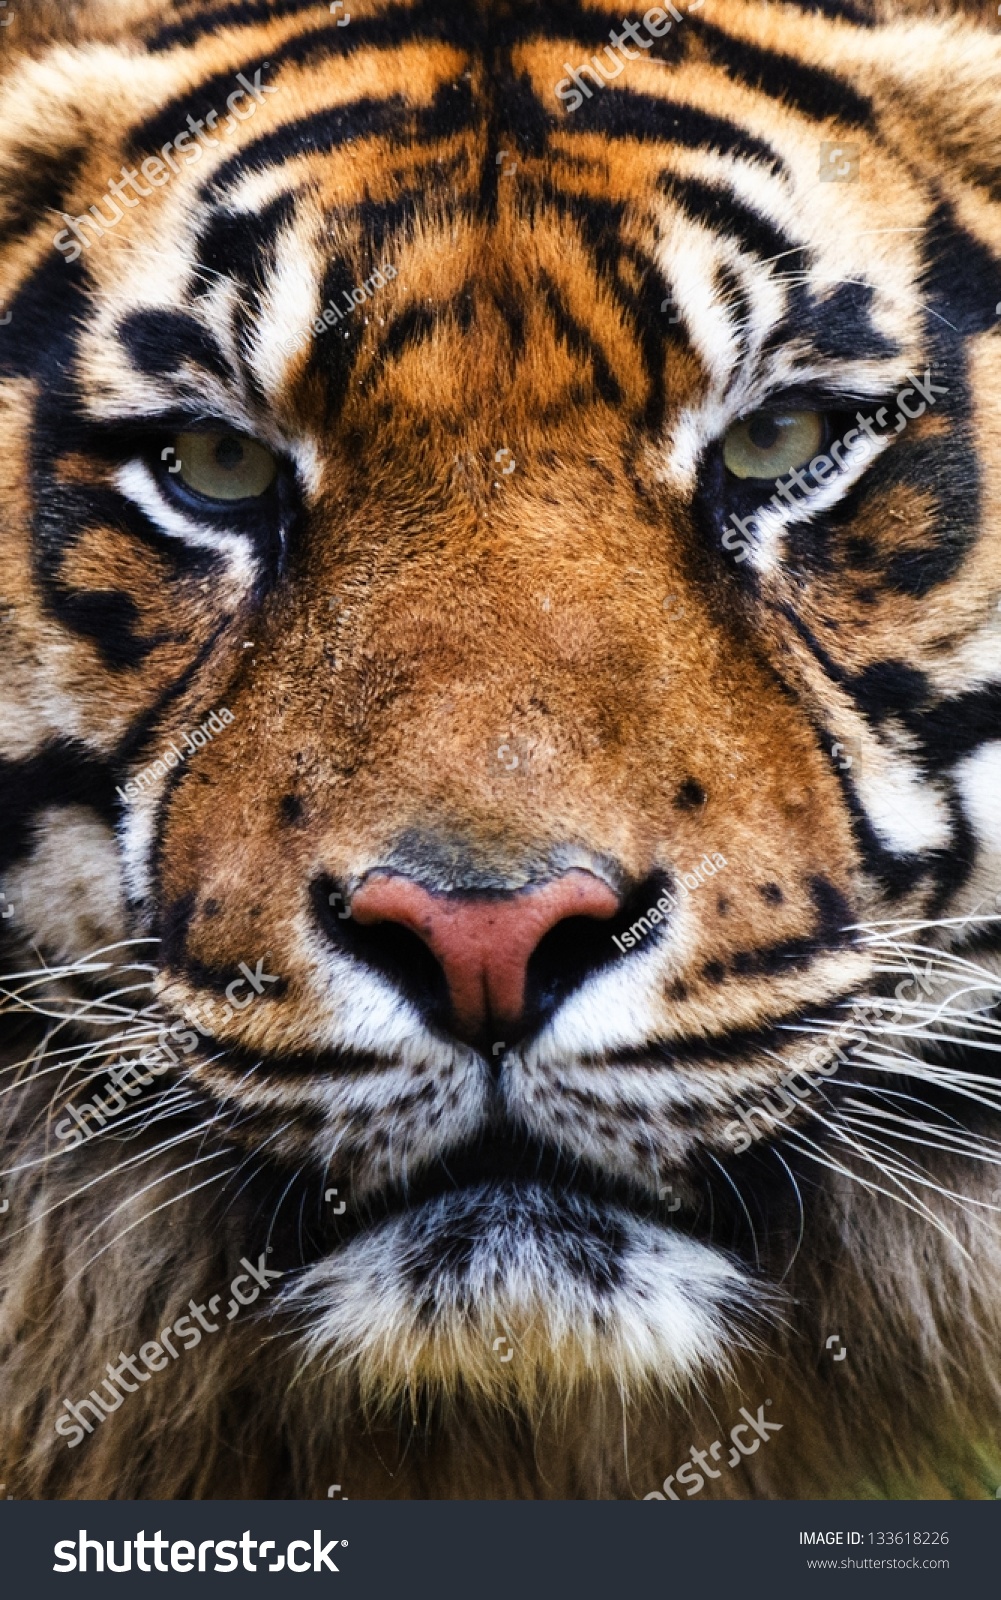 Tiger Close Portrait Stock Photo 133618226 - Shutterstock